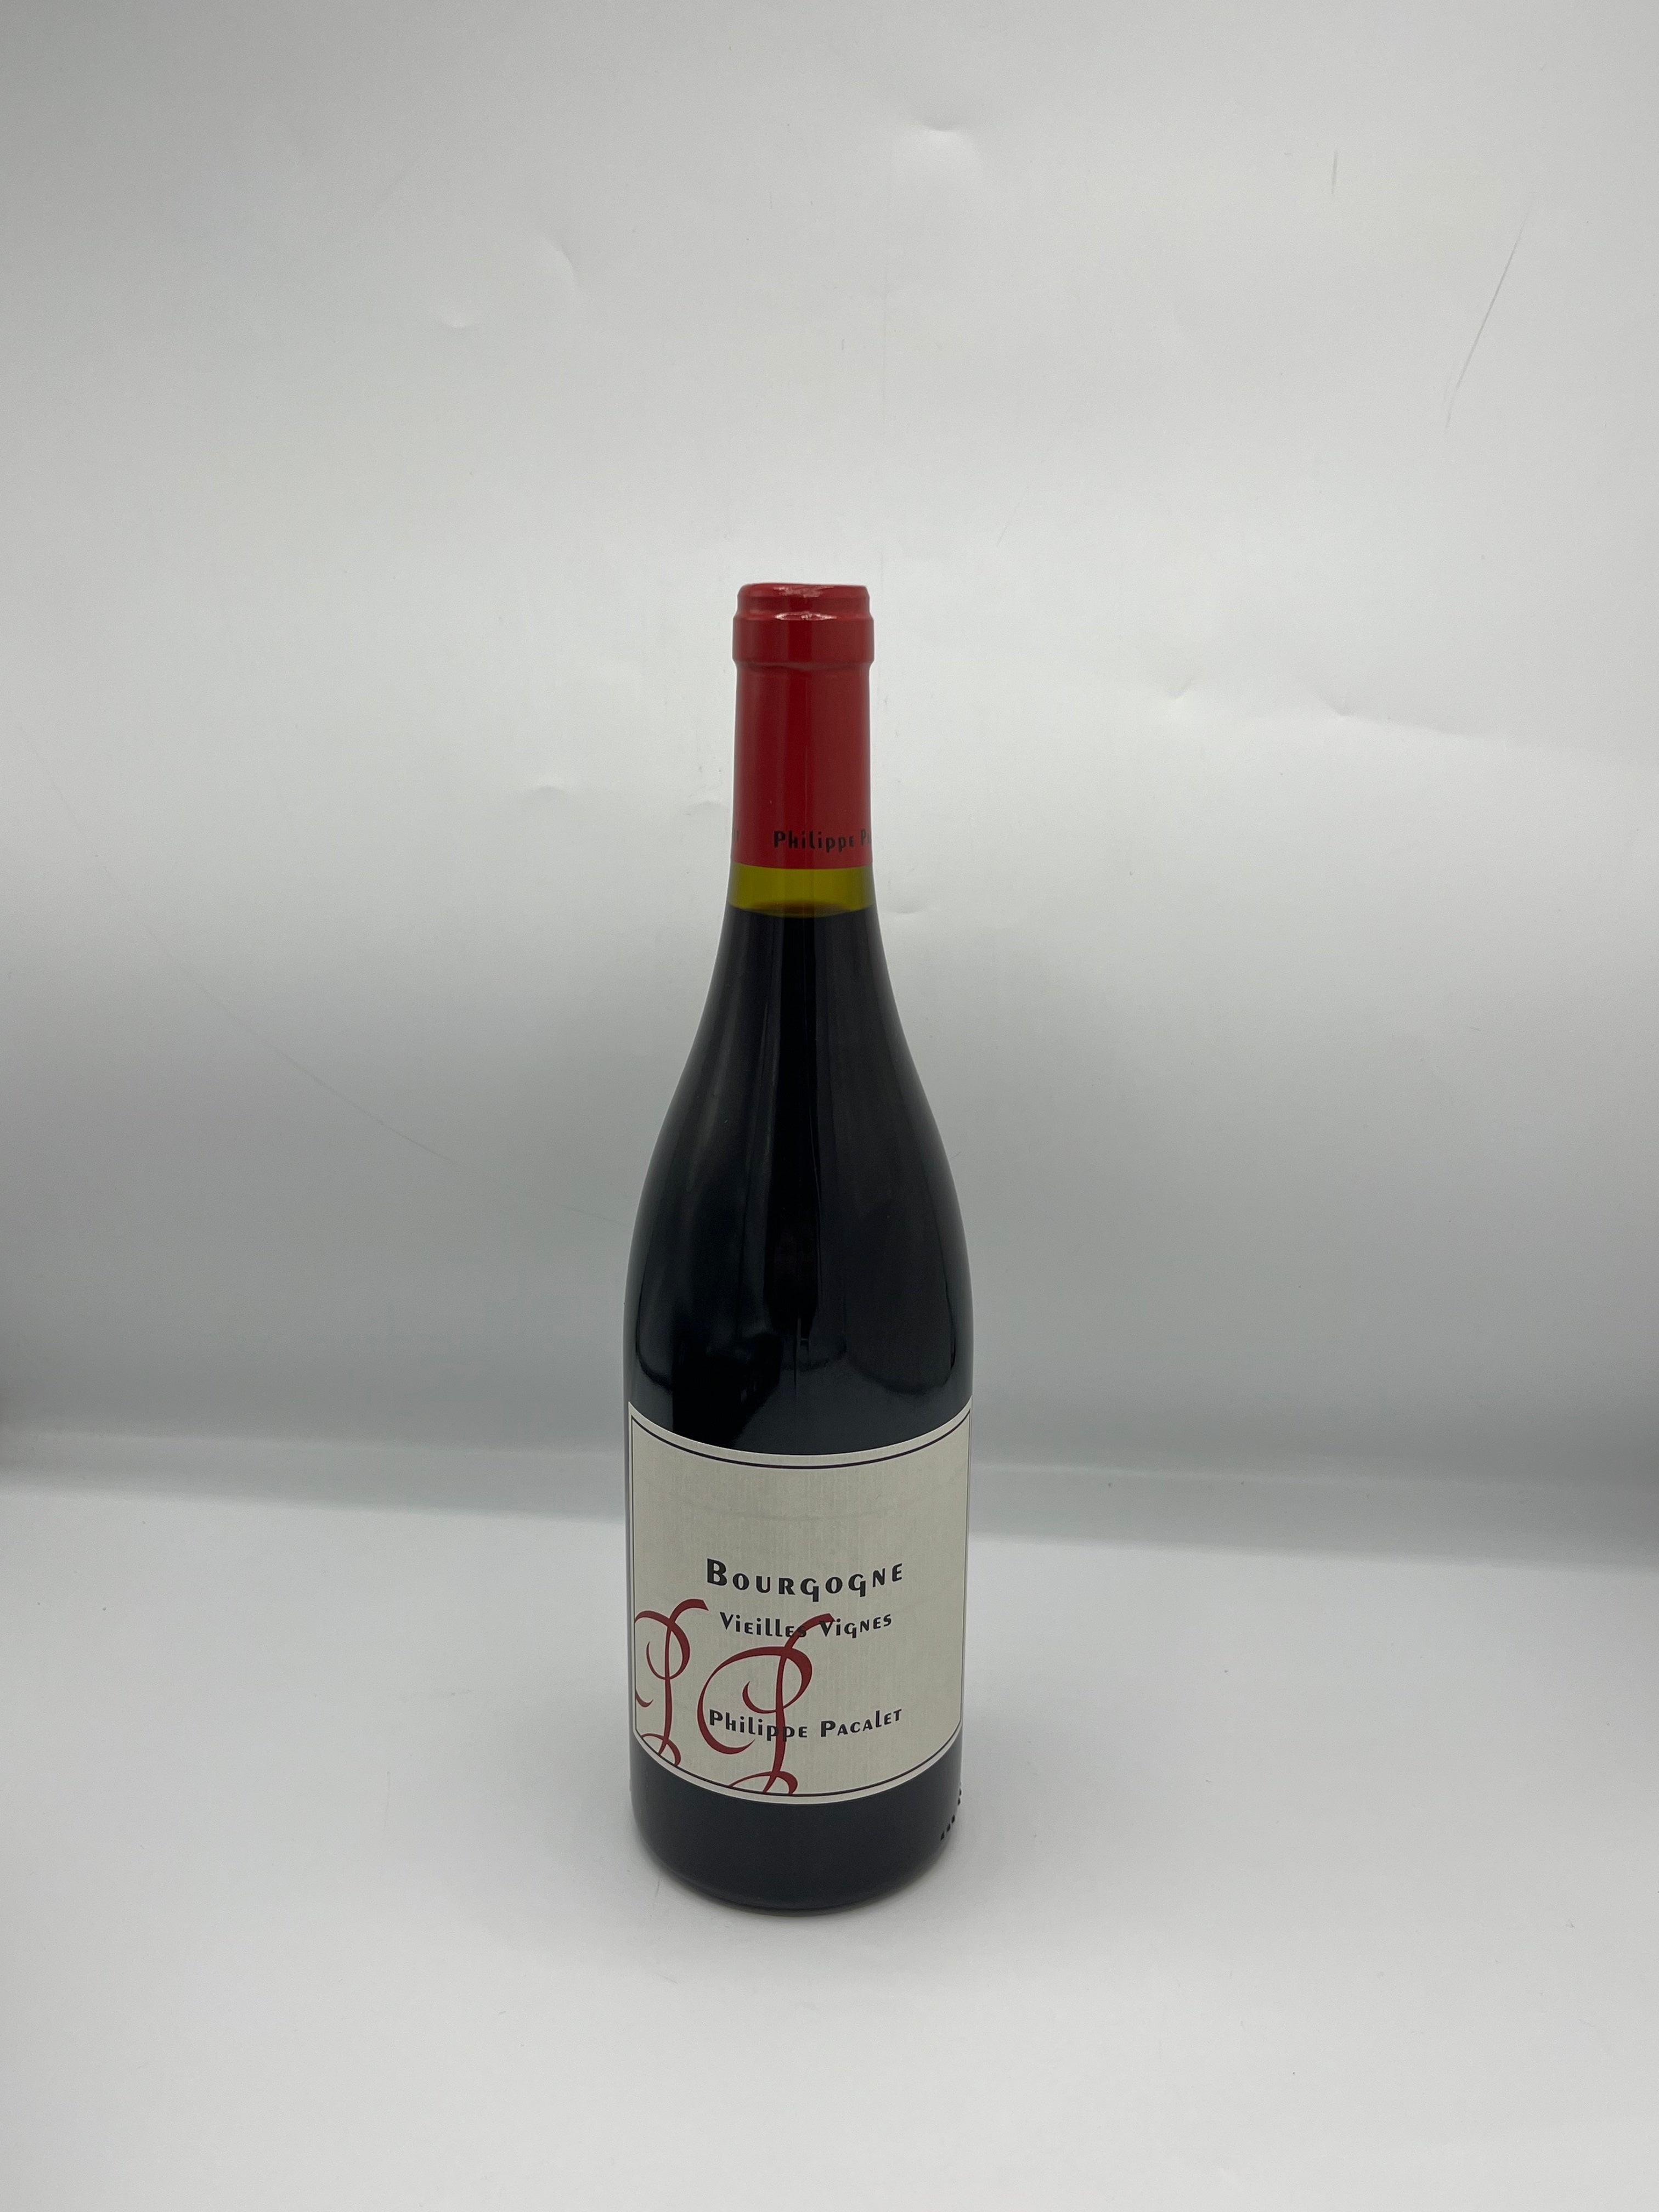 Borgonha “Vieilles Vignes” Tinto 2020 - Philippe Pacalet